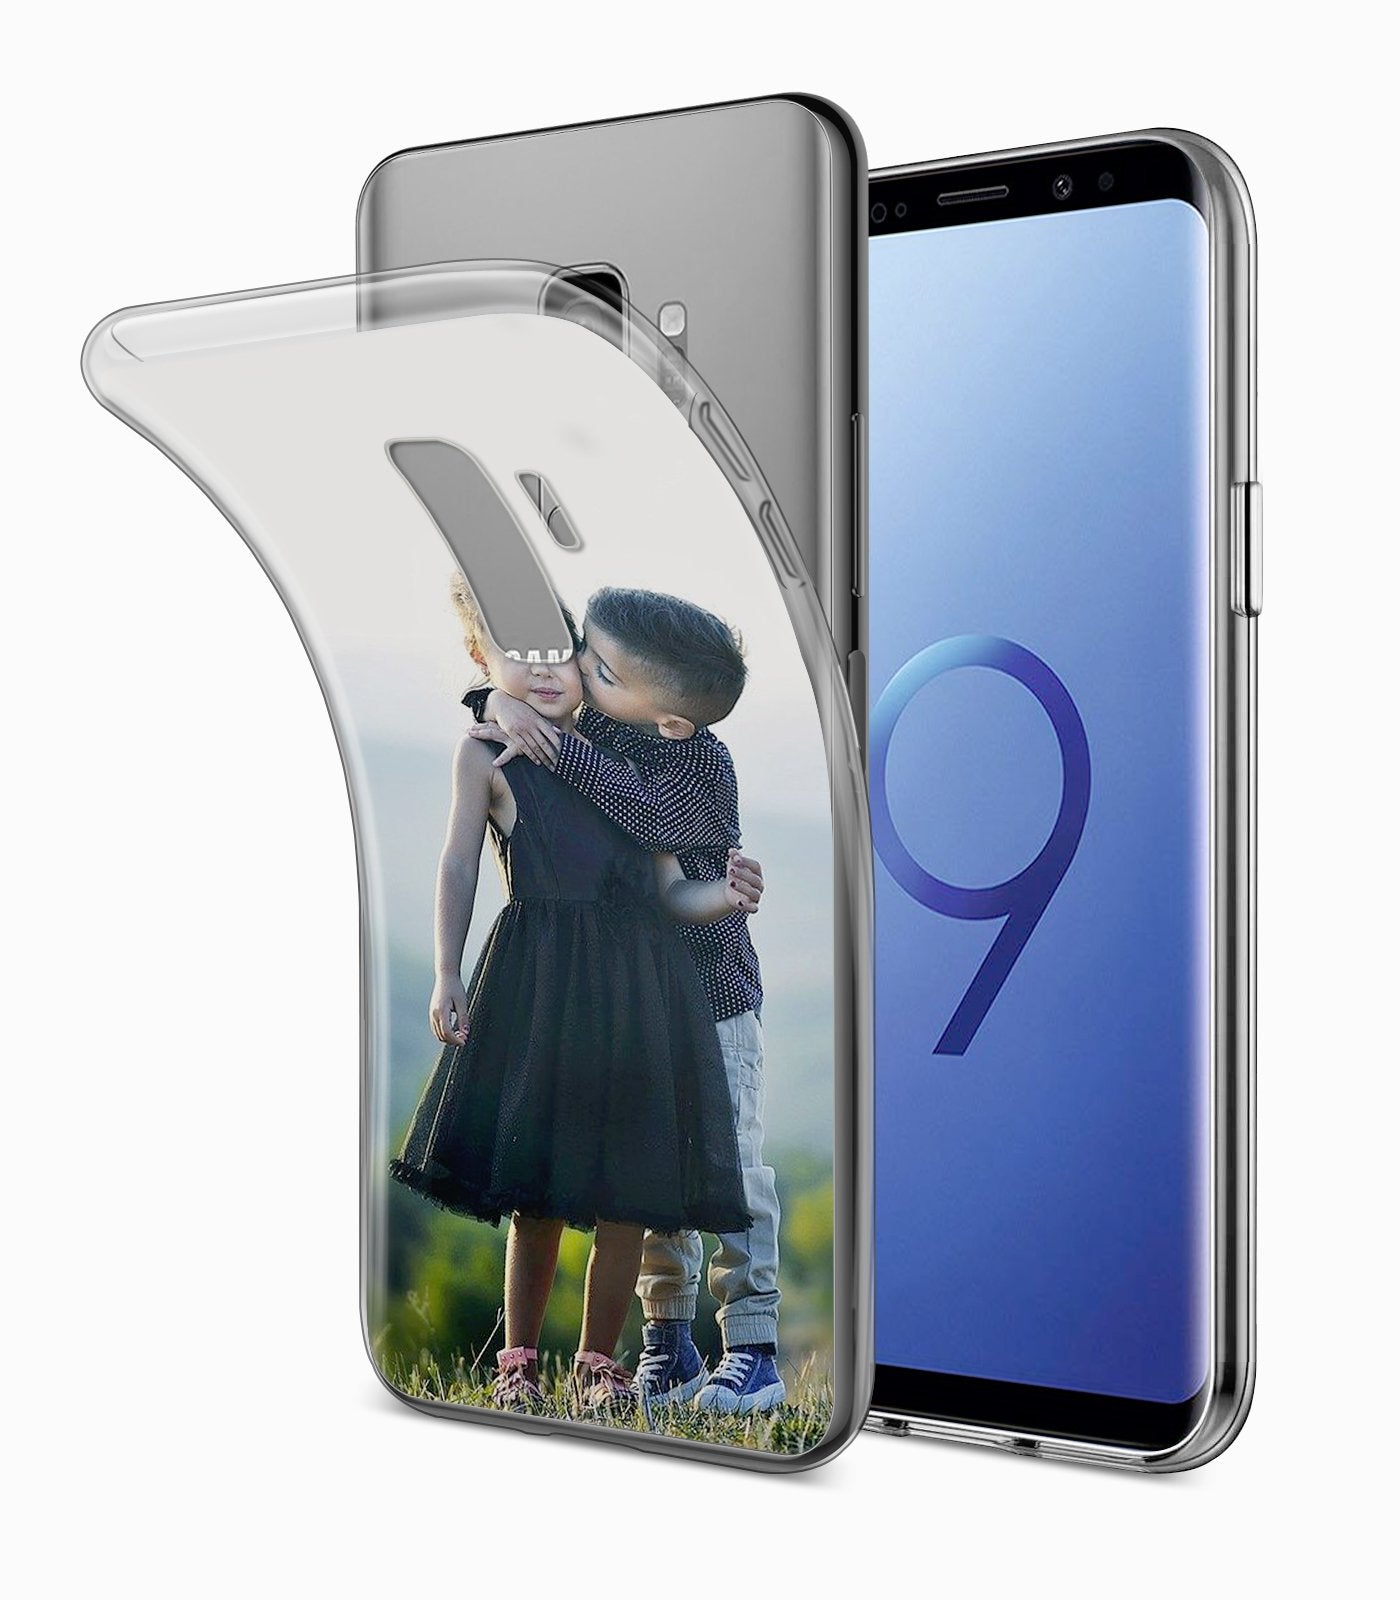 Samsung Galaxy S9 Plus Hülle personalisiert